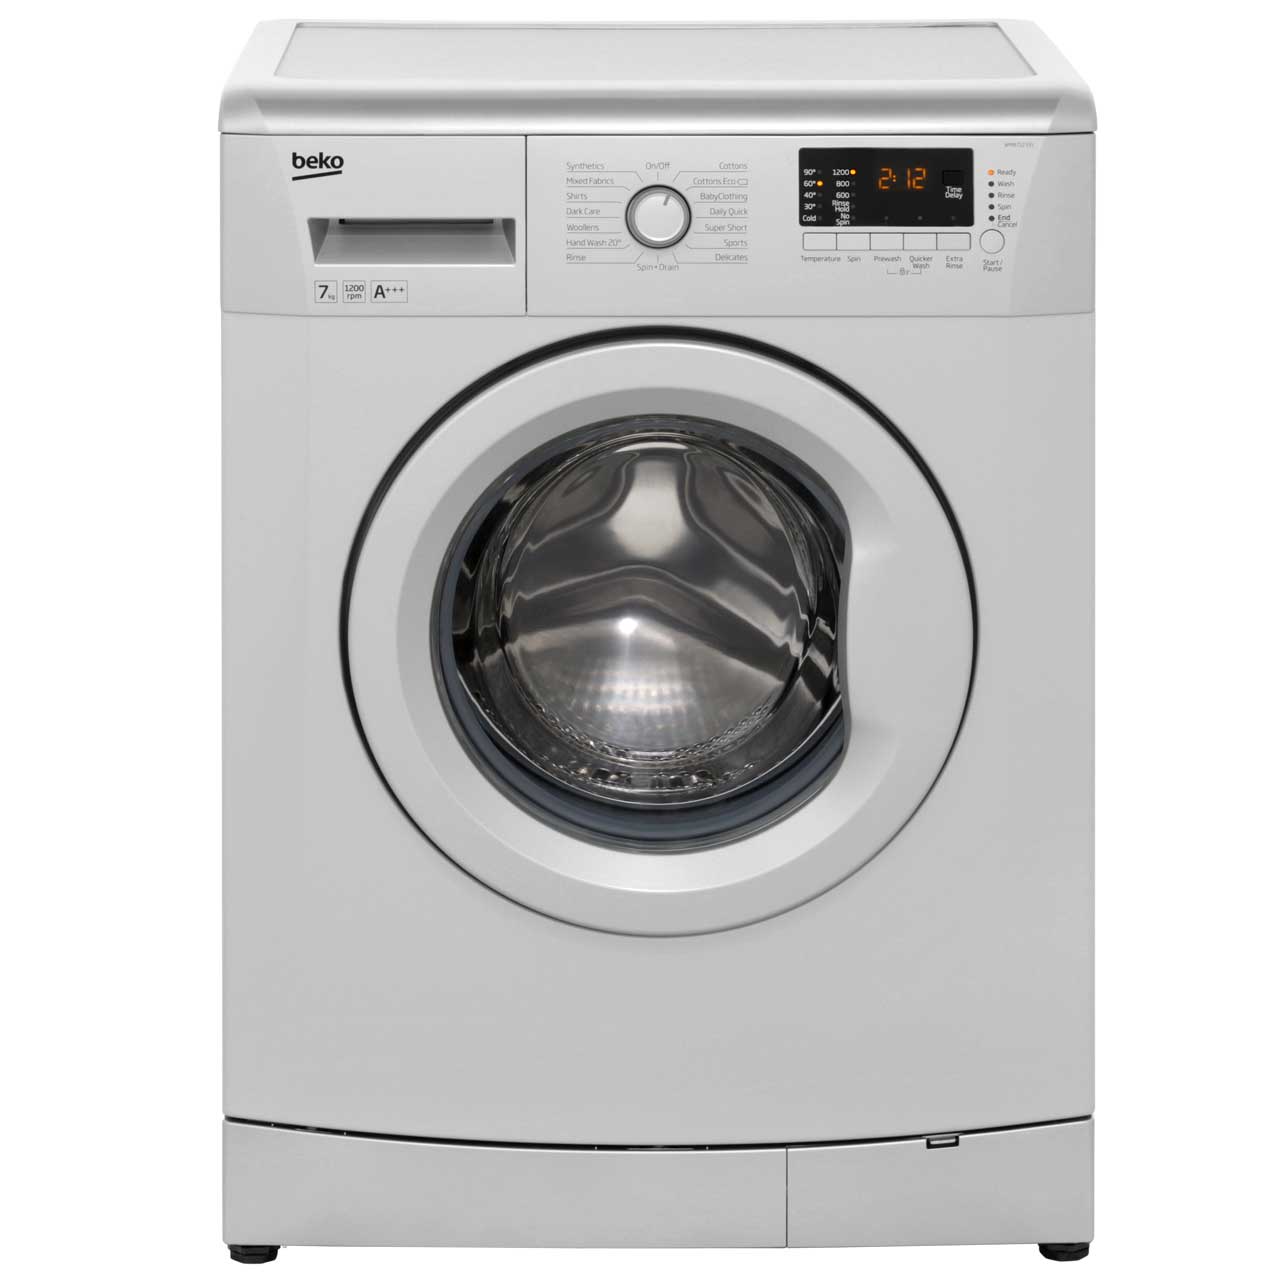 Beko WMB71233S 7Kg Washing Machine with 1200 rpm Review